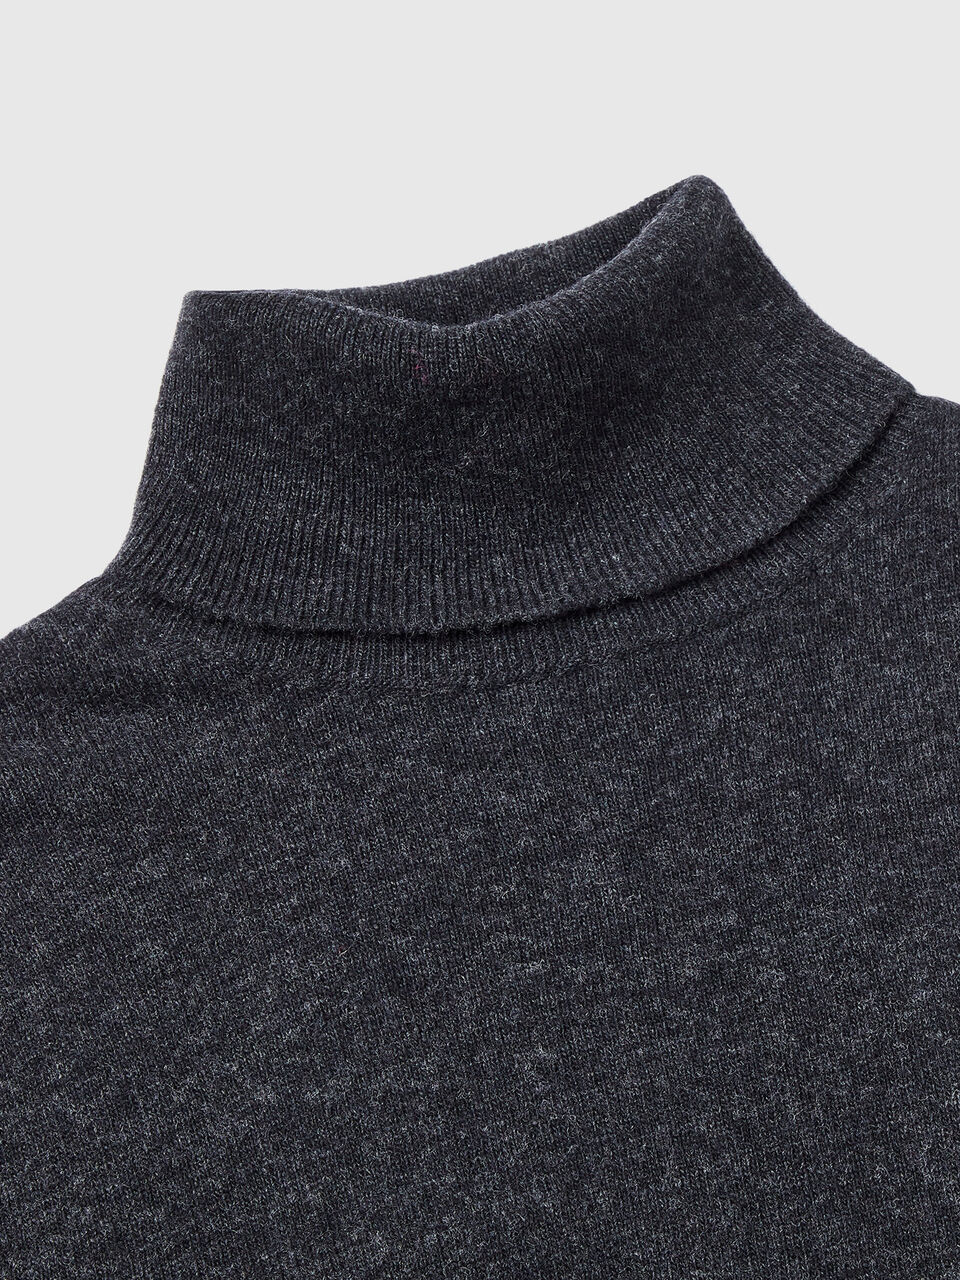 Charcoal gray turtleneck sweater in pure Merino wool - Dark Gray | Benetton